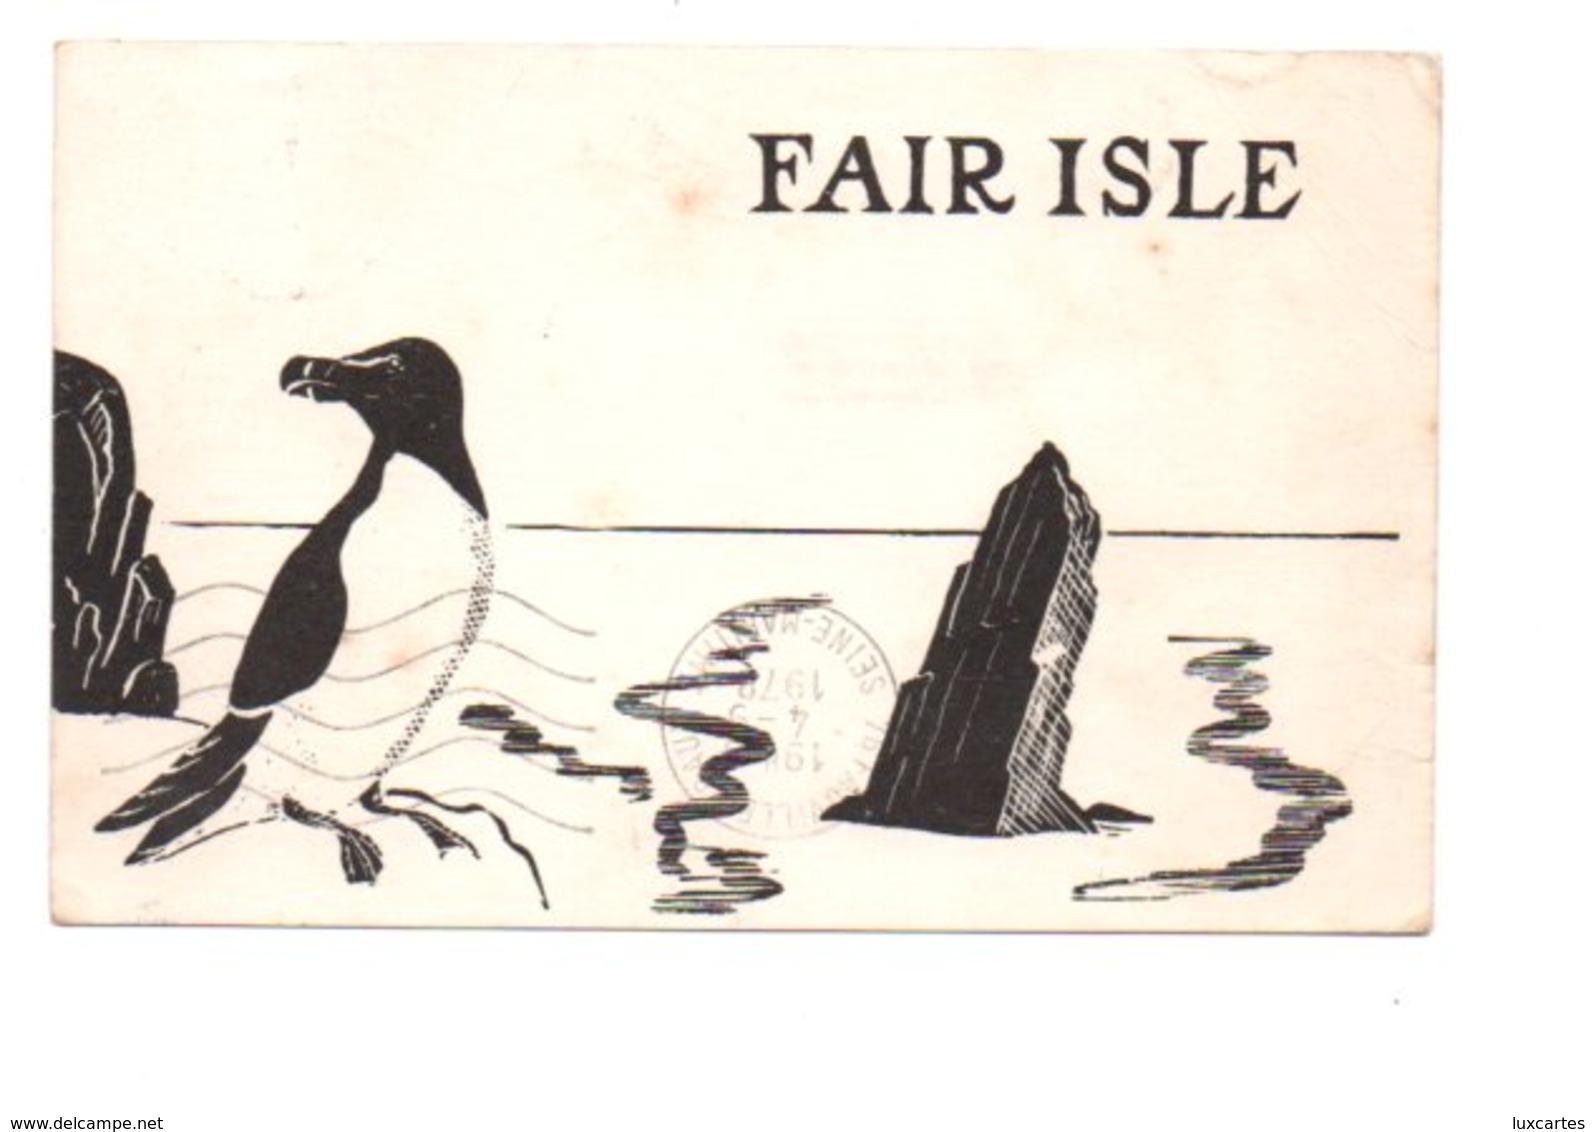 FAIR ISLE. - Shetland